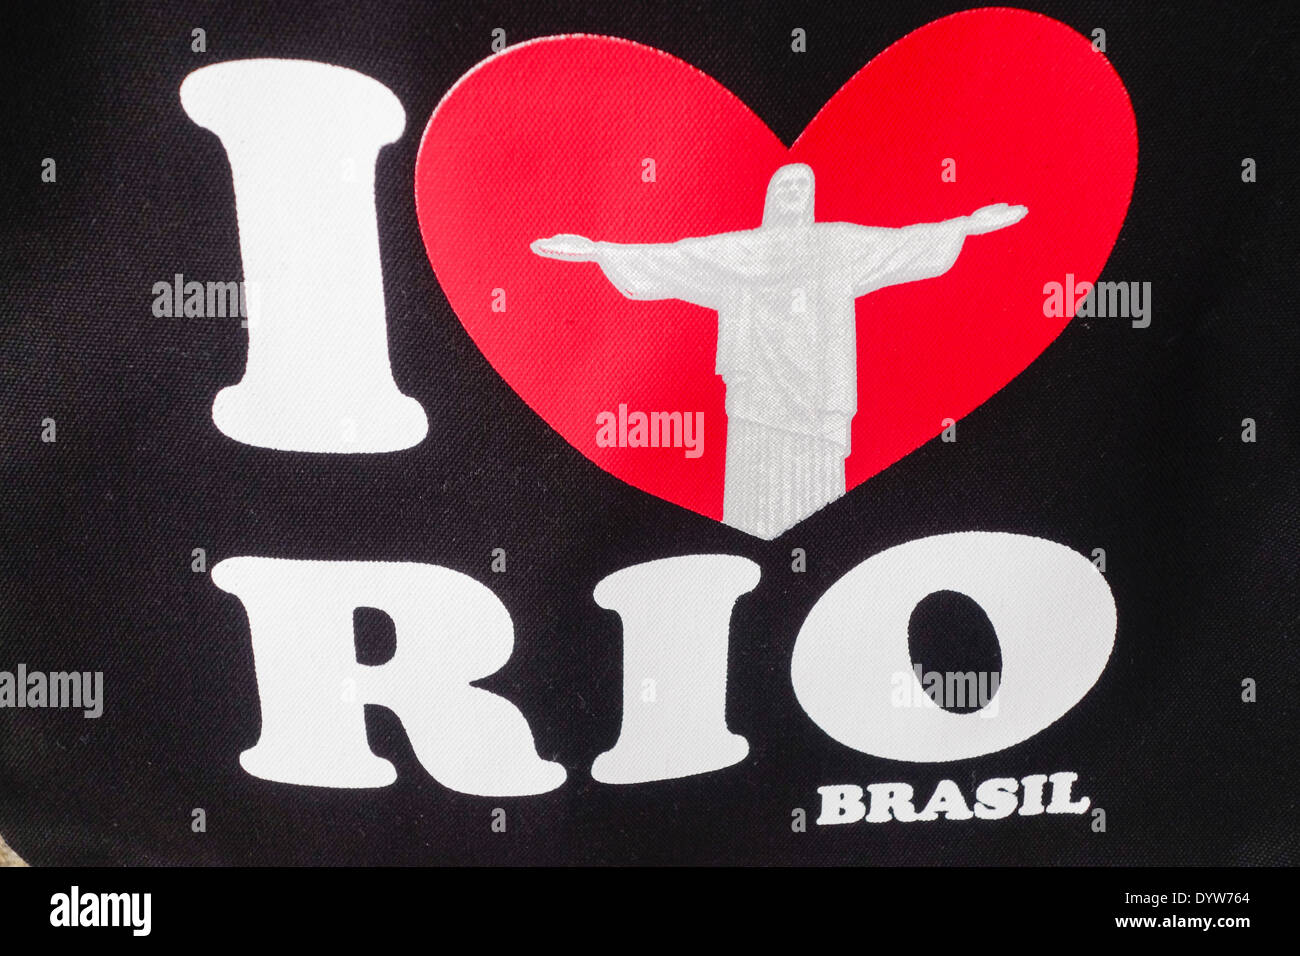 Brazil FIFA World Cup 2014 football world championship, Rio de Janeiro, I love Rio, Brazil Stock Photo